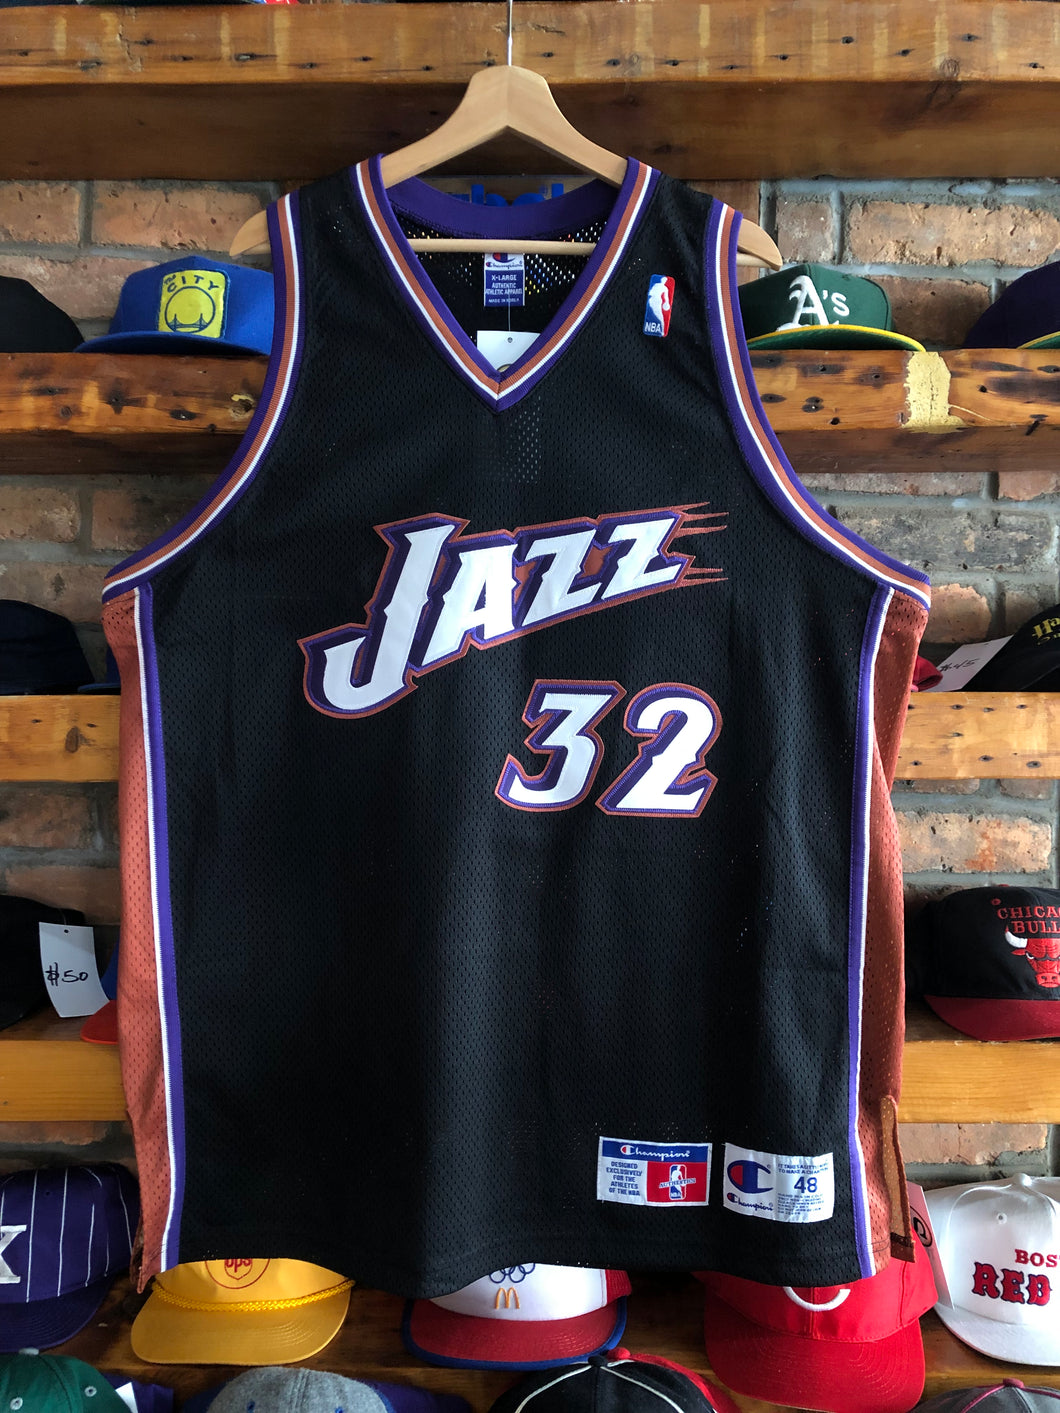 Vintage Champion Authentic Utah Jazz Karl Malone Jersey Size 48/XL